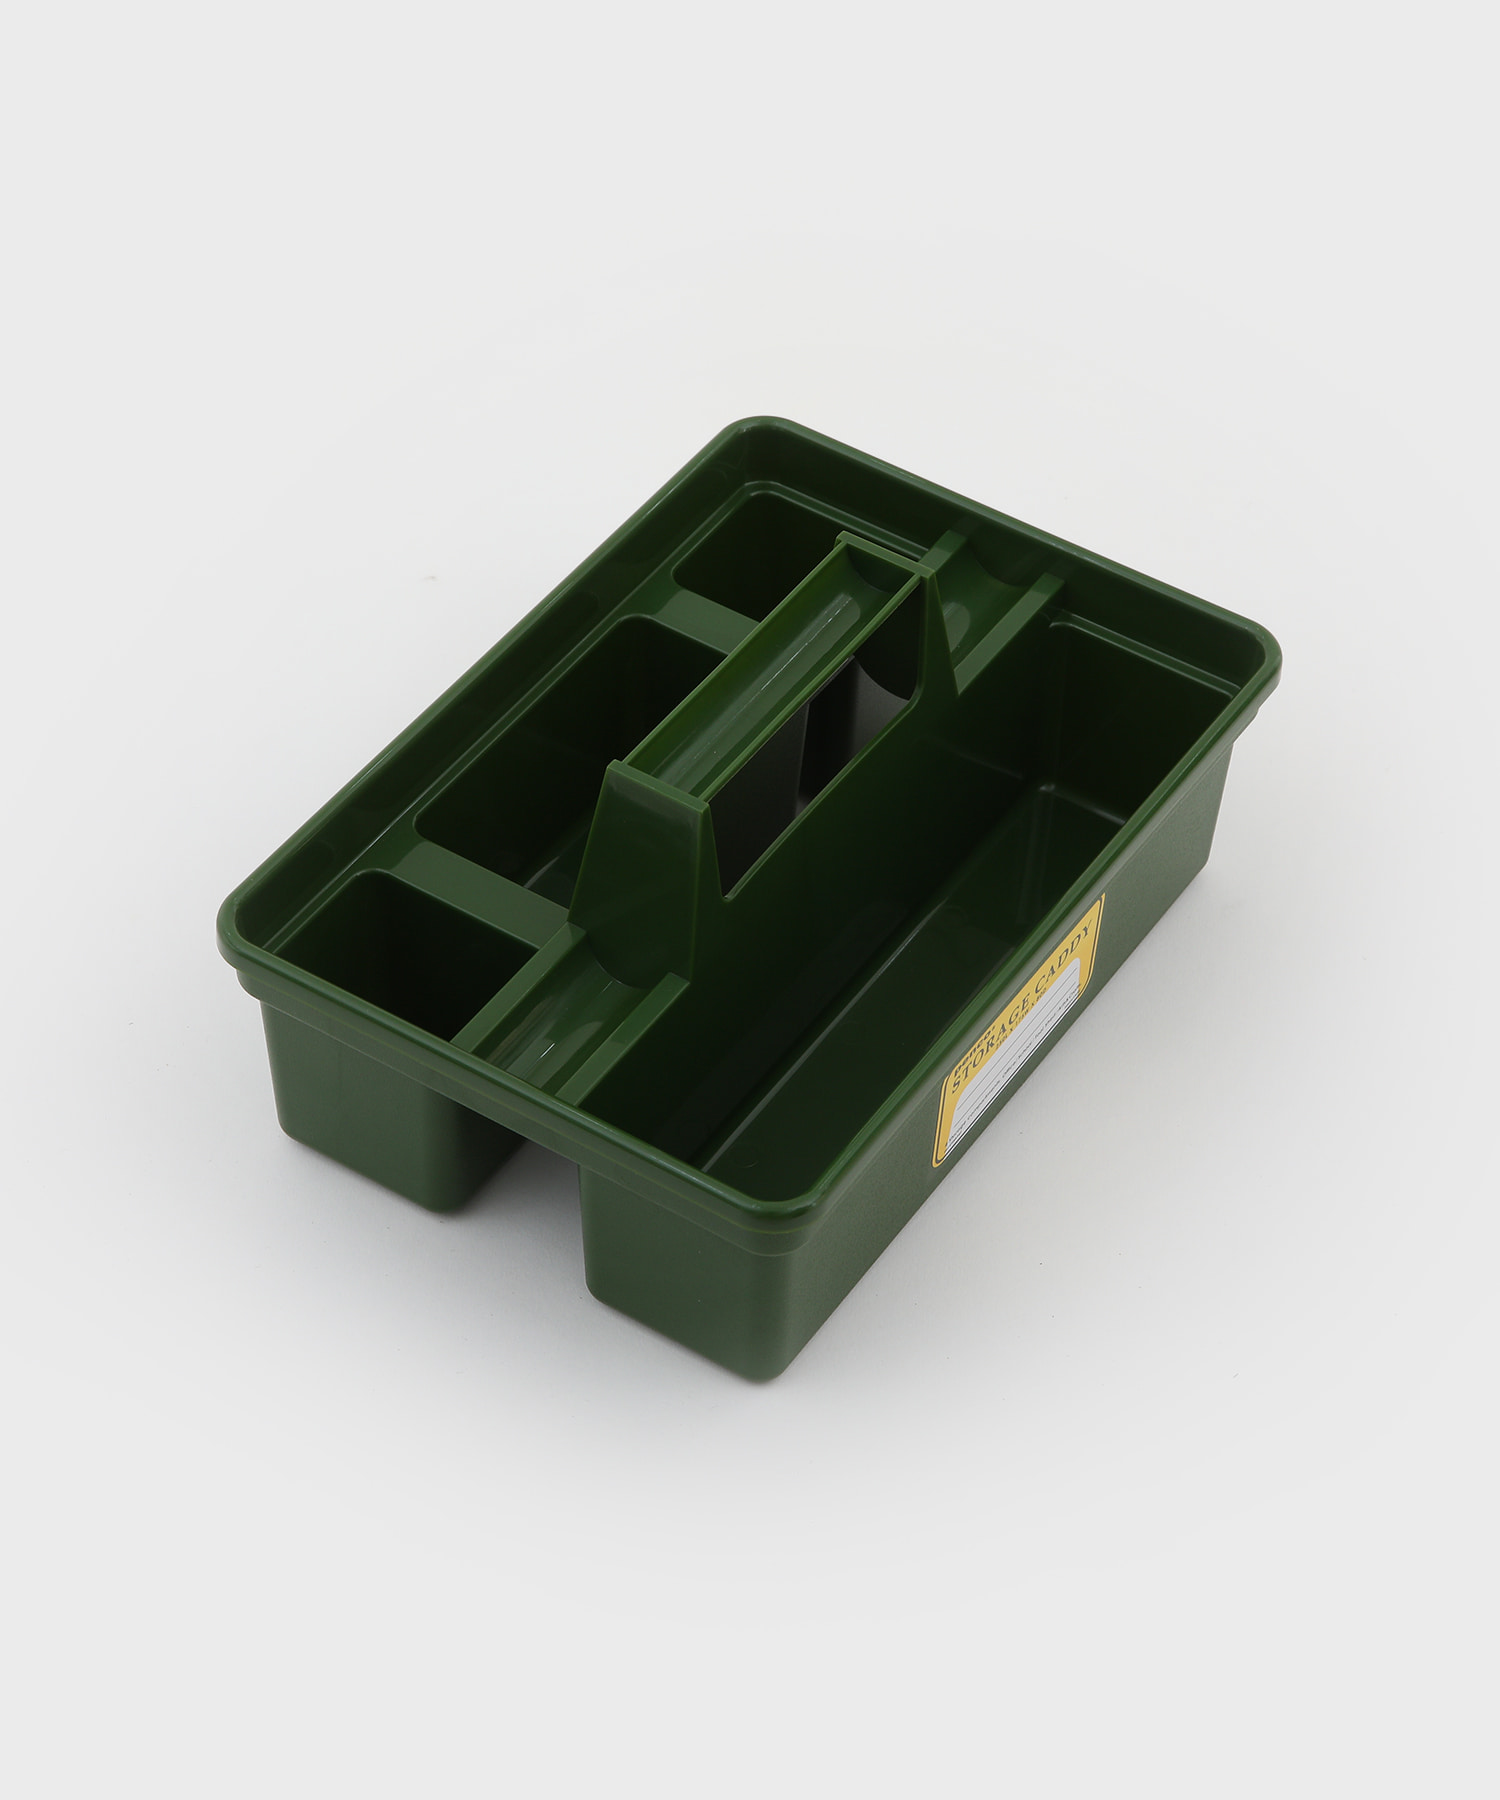 Penco Storage Caddy (Green)